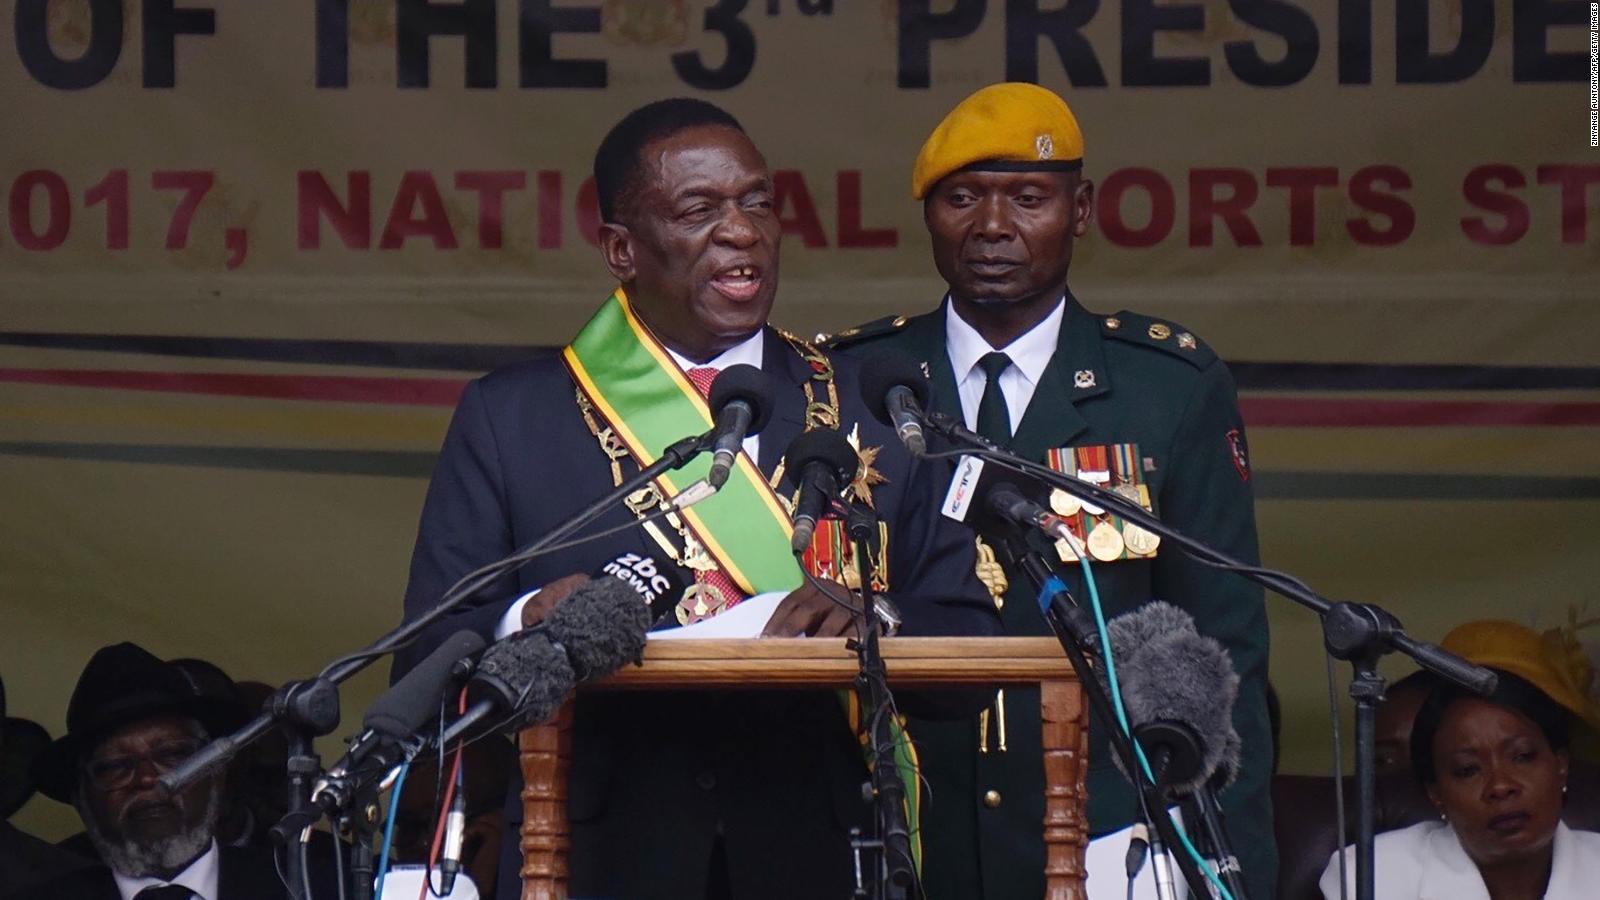 Conoce a Emmerson Mnangagwa, el nuevo presidente de Zimbabwe Video CNN